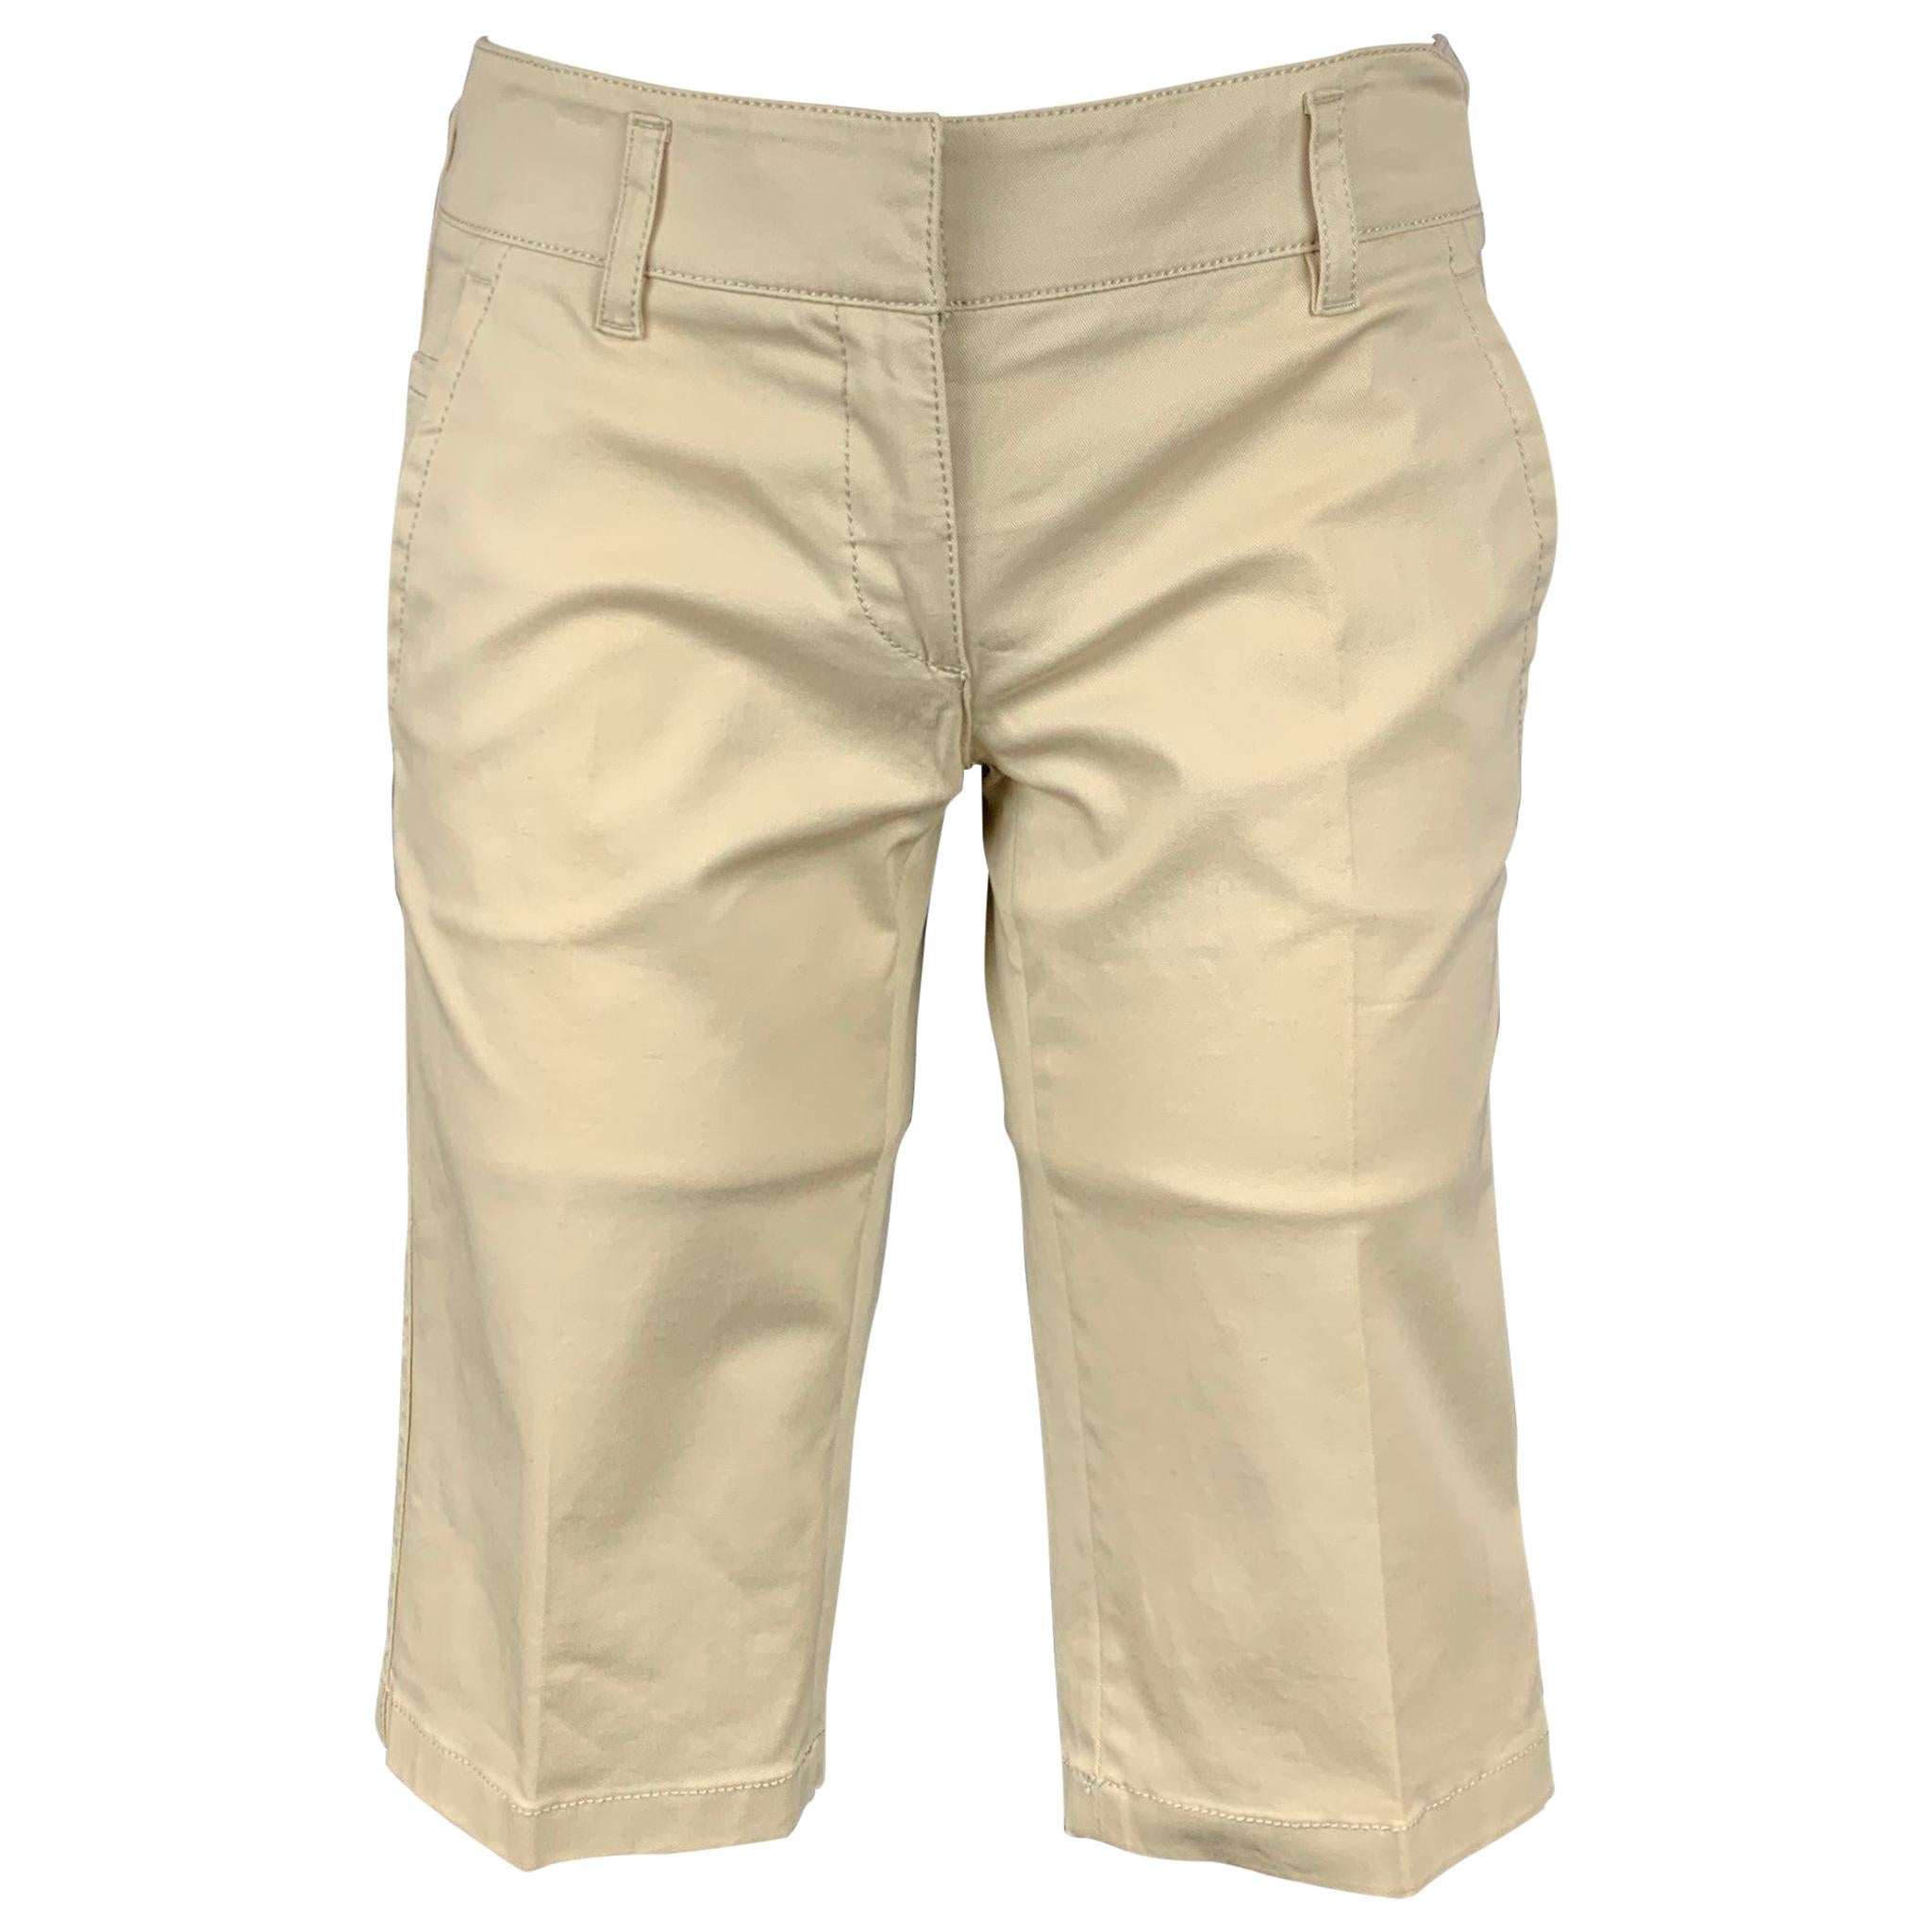 PRADA Size 2 Beige Cotton Blend Bermuda Shorts